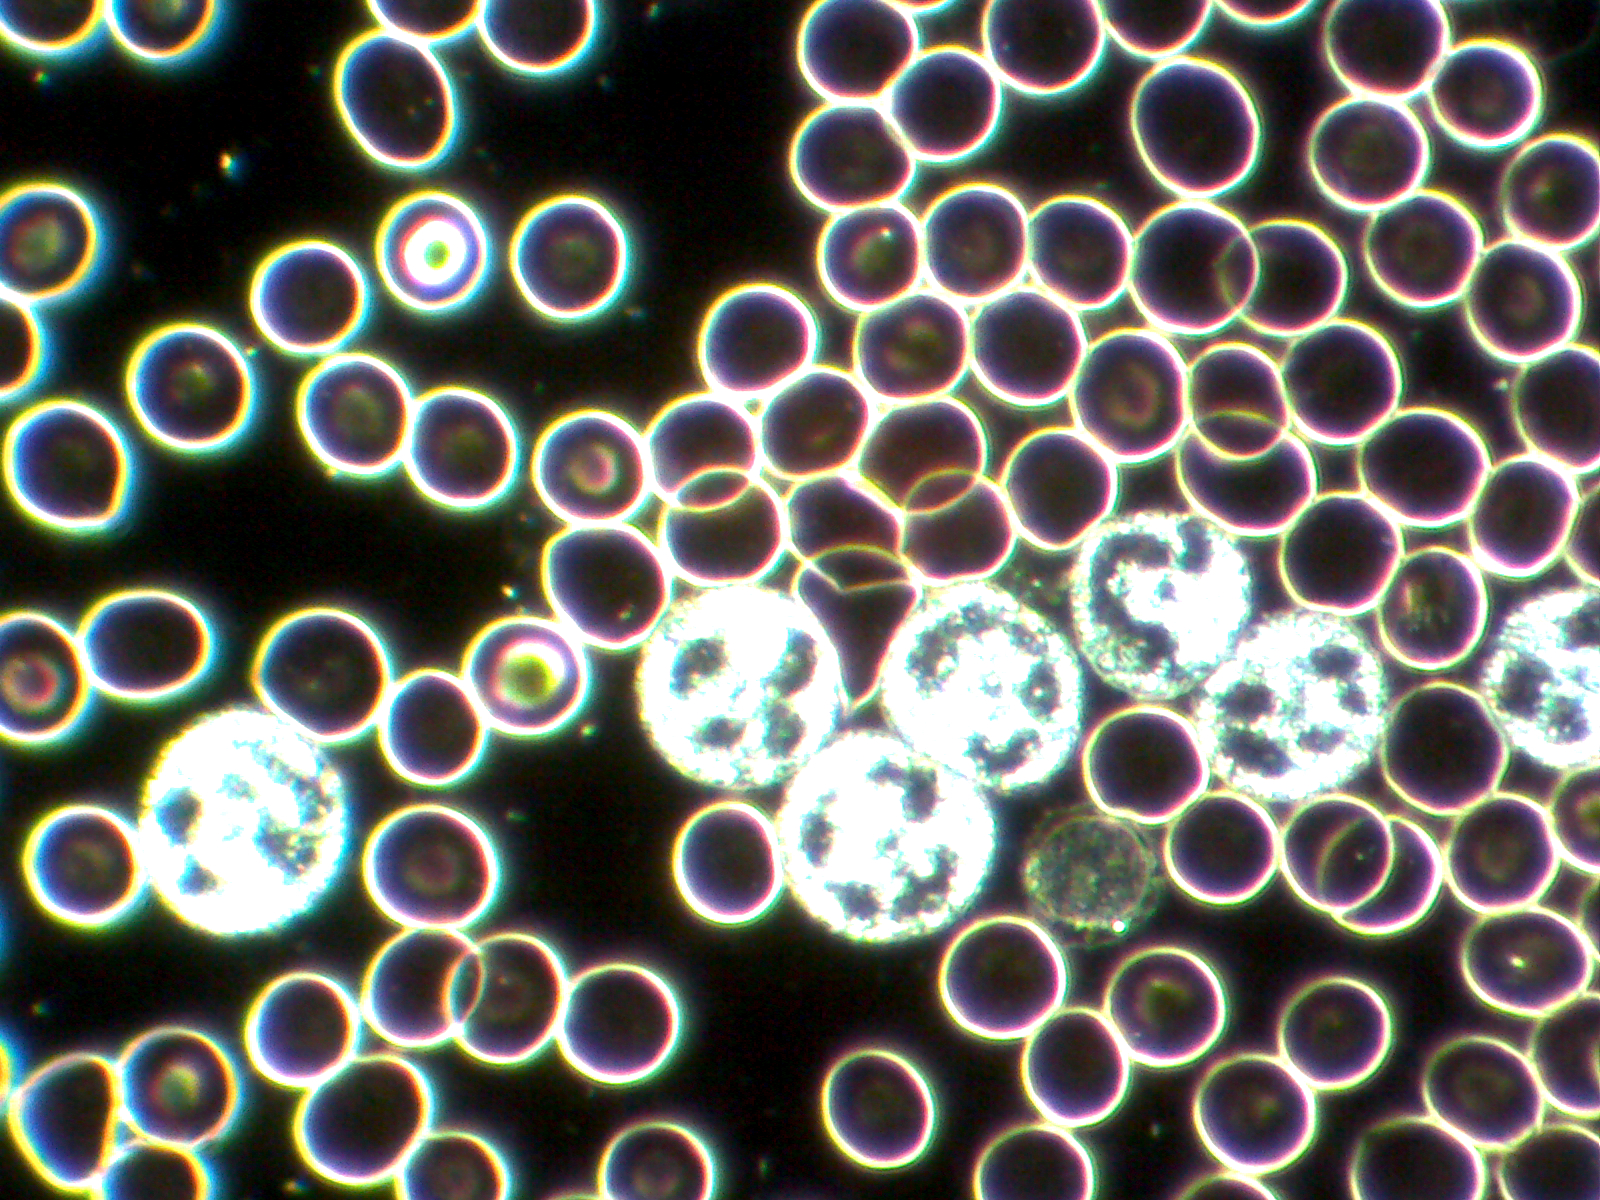 live blood viewed through a darkfield microscope